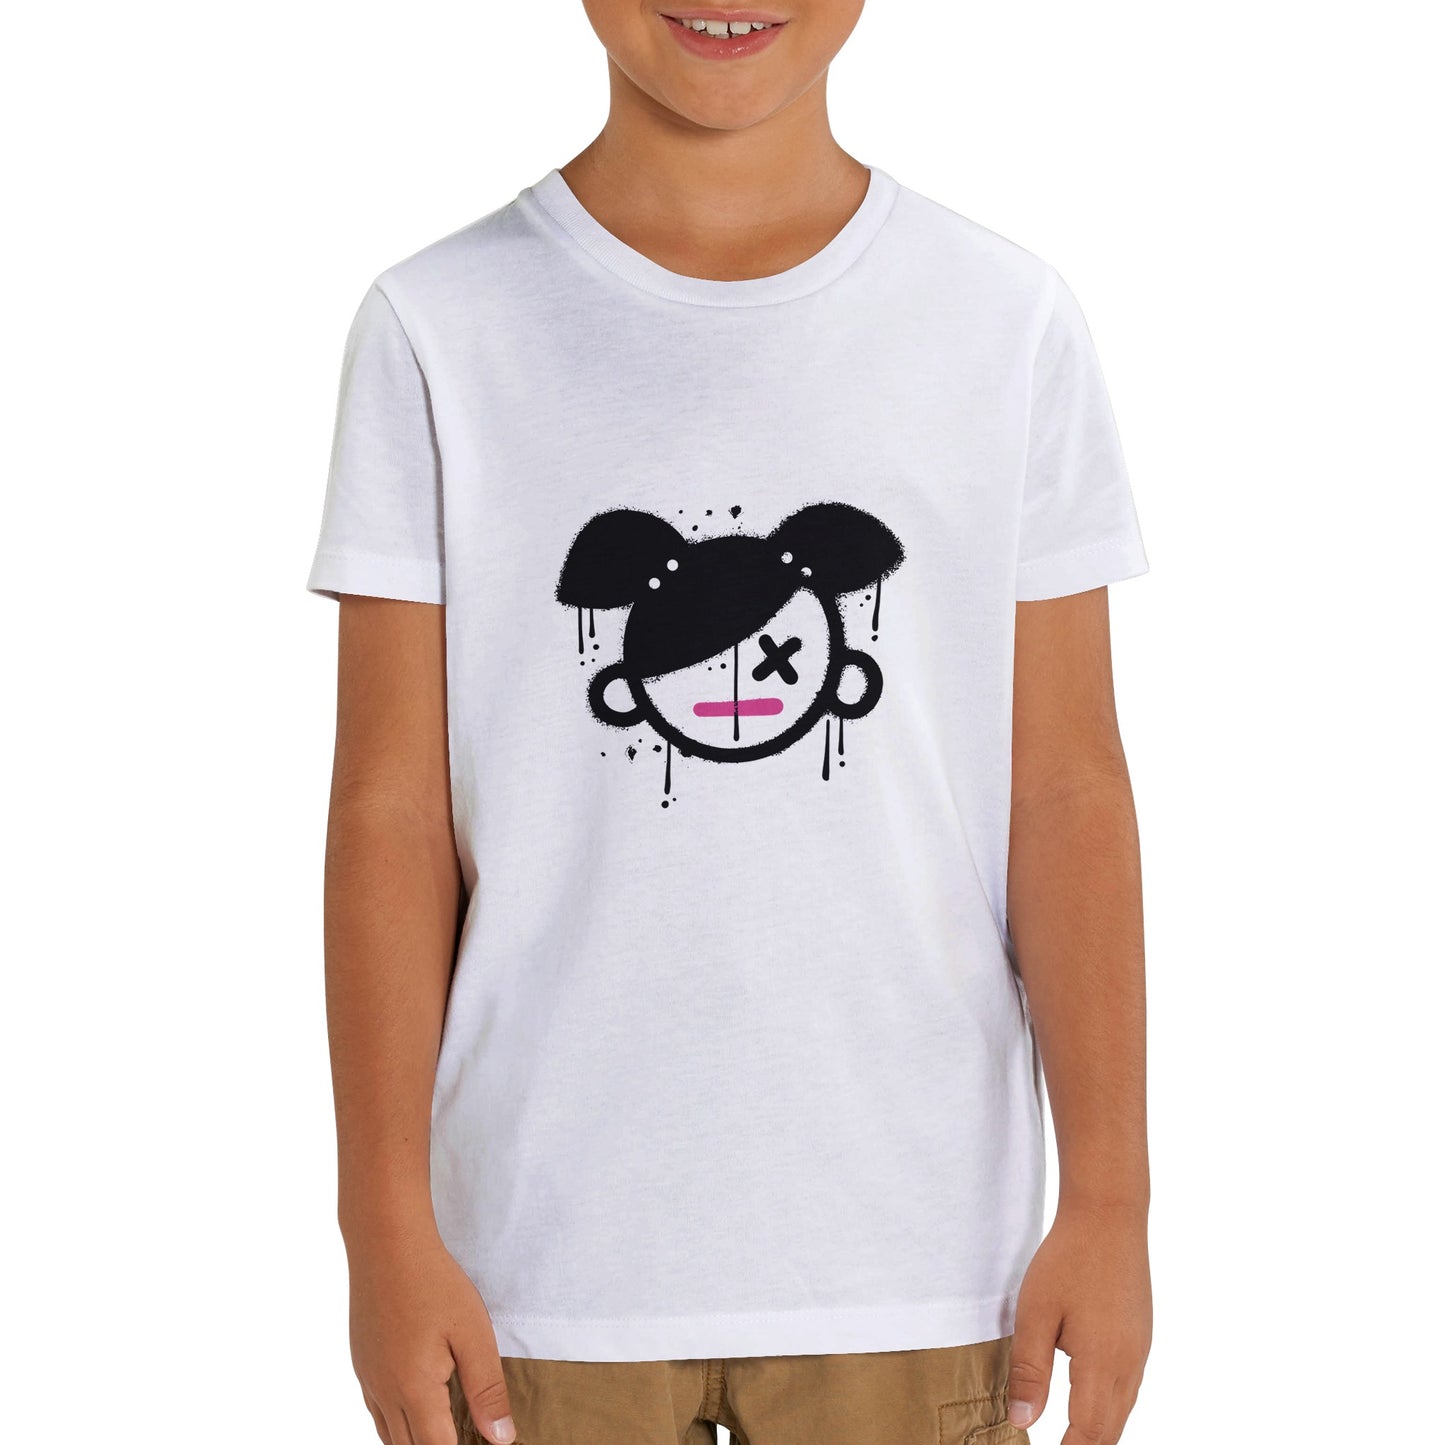 Bio Kinder Rundhals T-Shirt/Girly